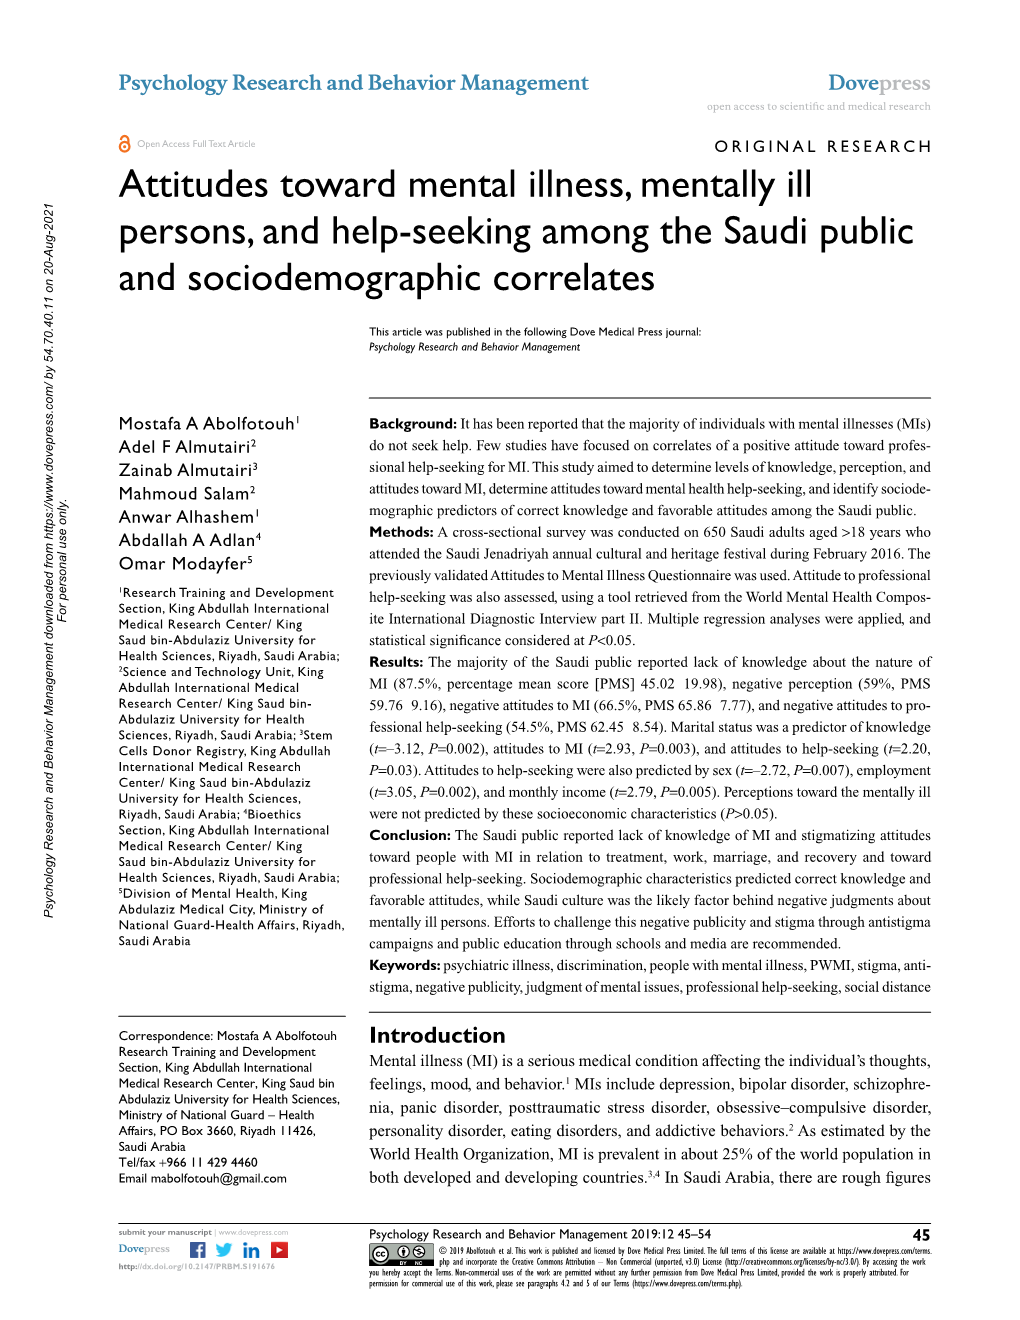 Attitudes Toward Mental Illness, Mentally Ill Persons, and Help-Seeking Among the Saudi Public and Sociodemographic Correlates